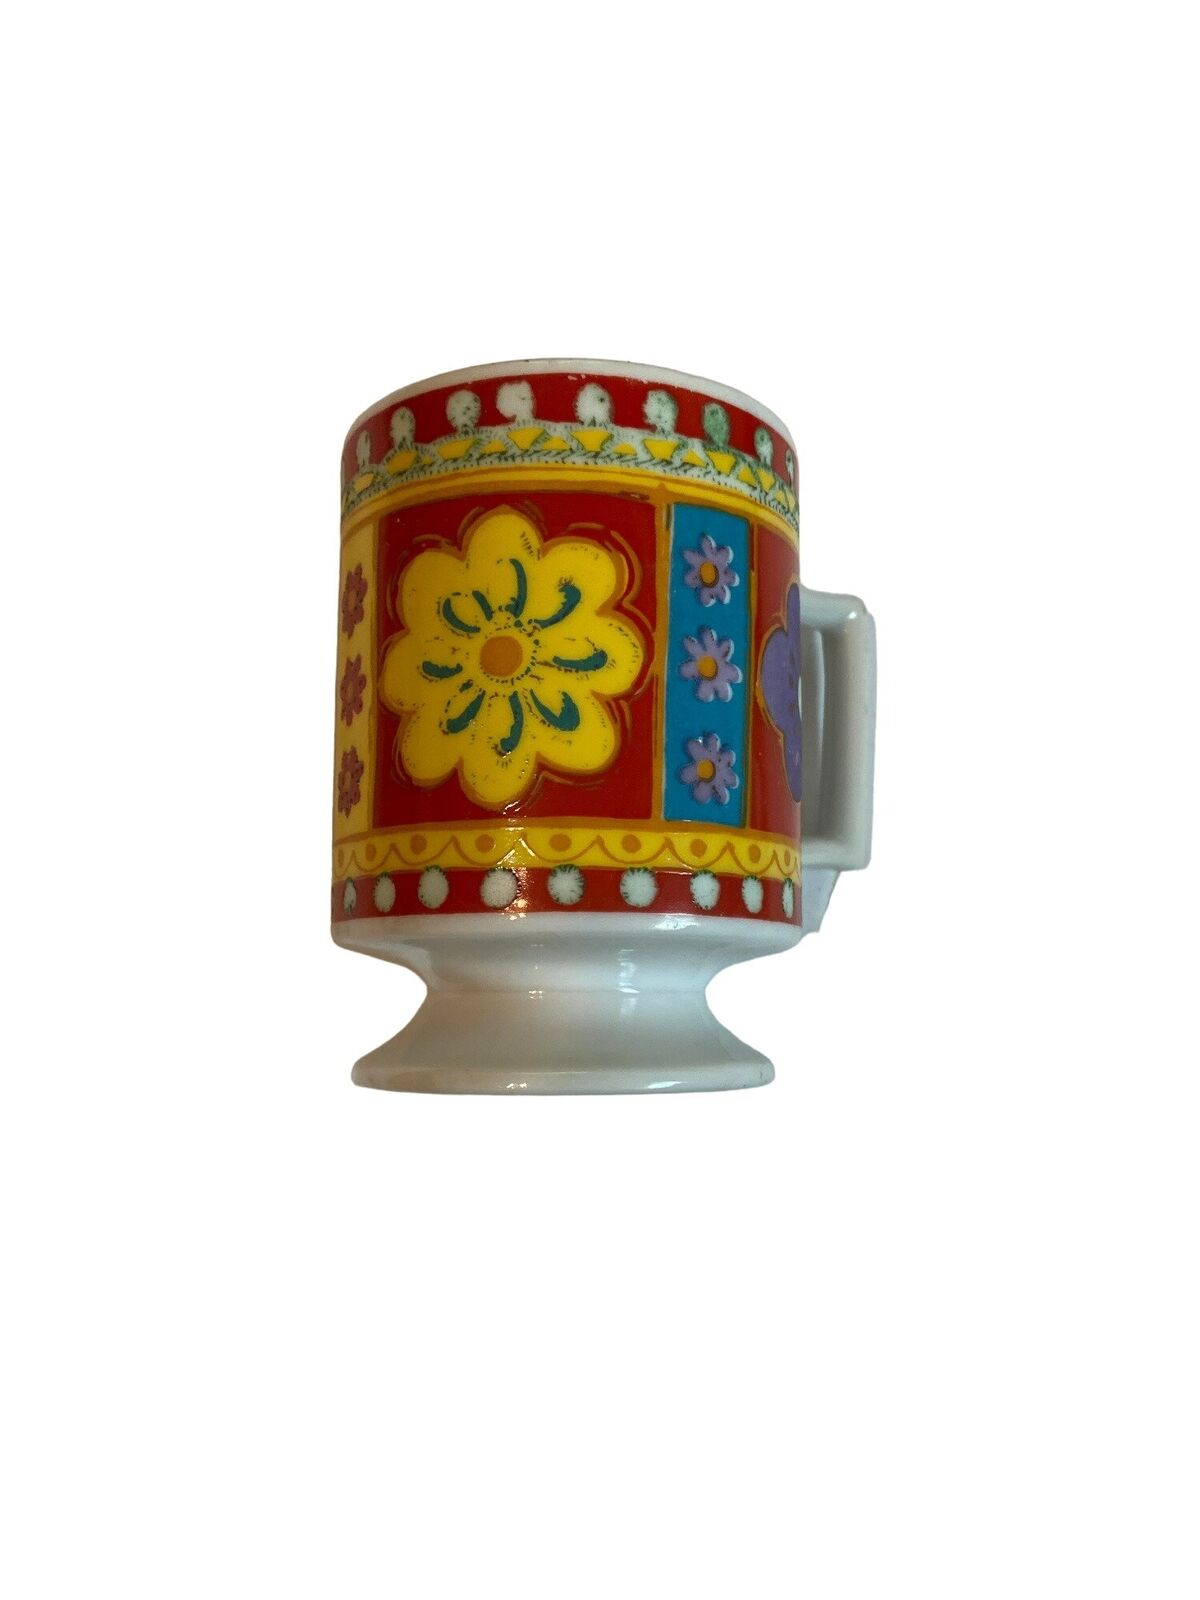 Vintage MCM graphic print coffee tea mug cup limerick Japan R6927